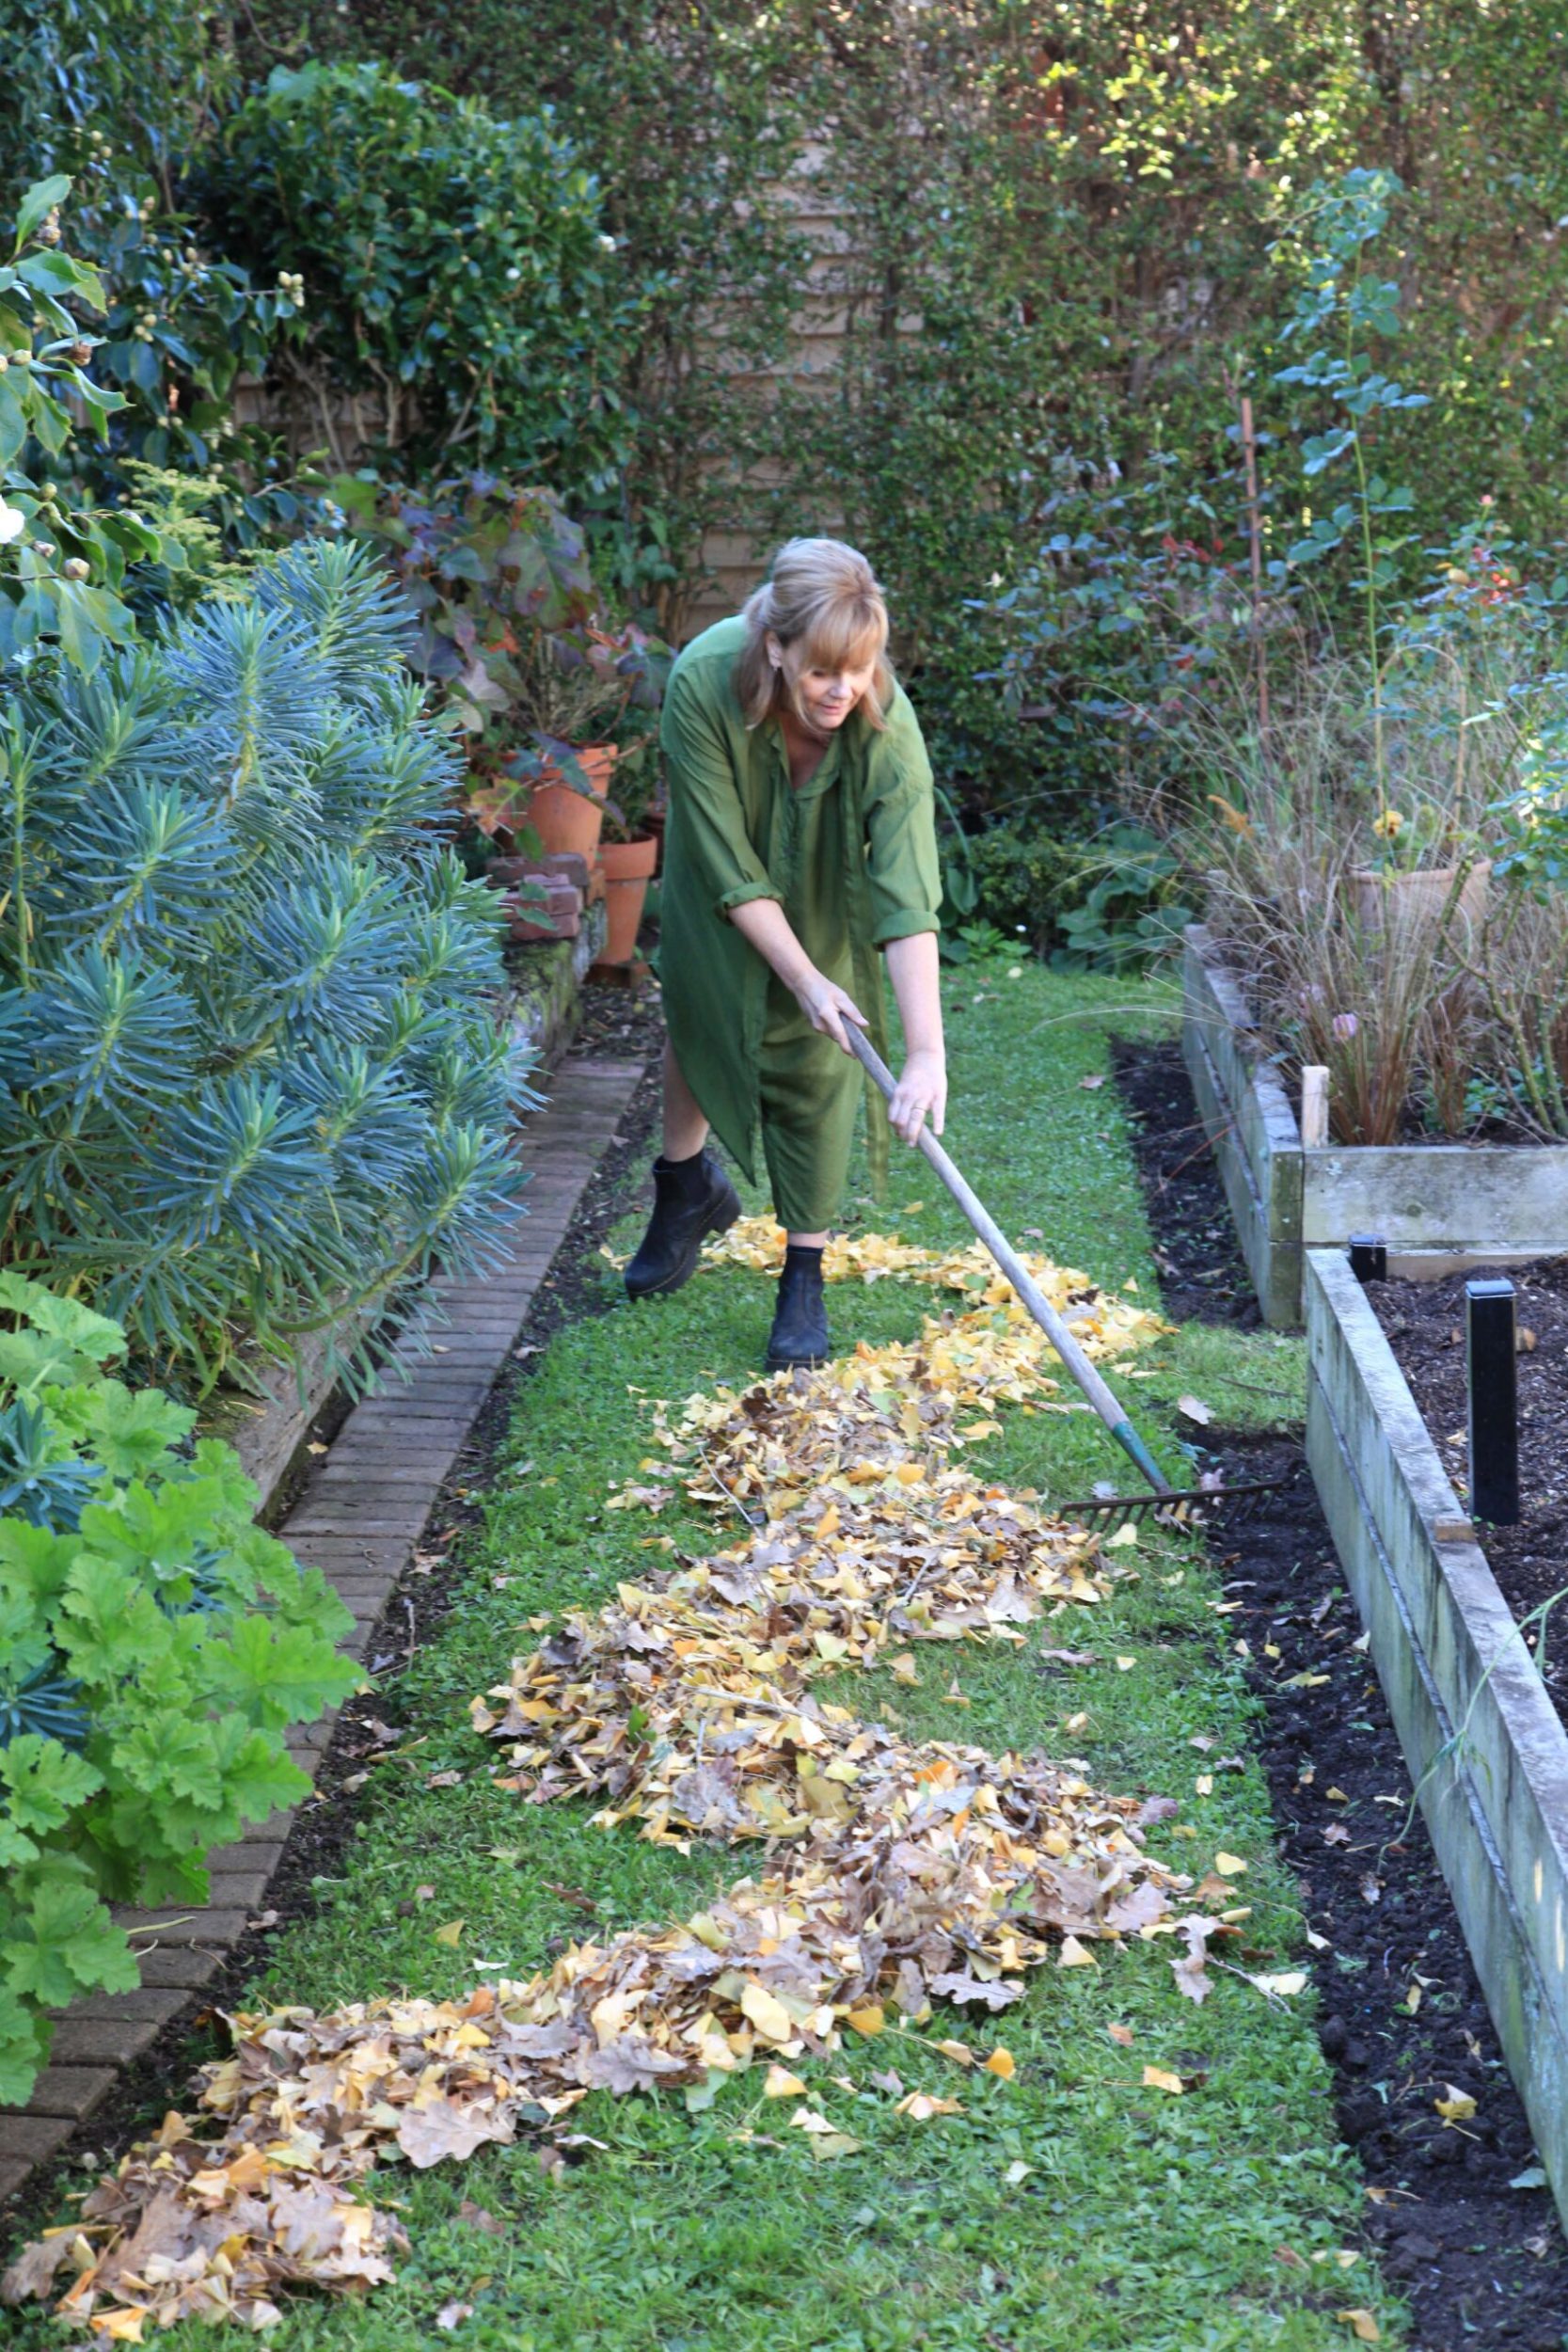 Felicity Jones raking wilted leaves in a garden